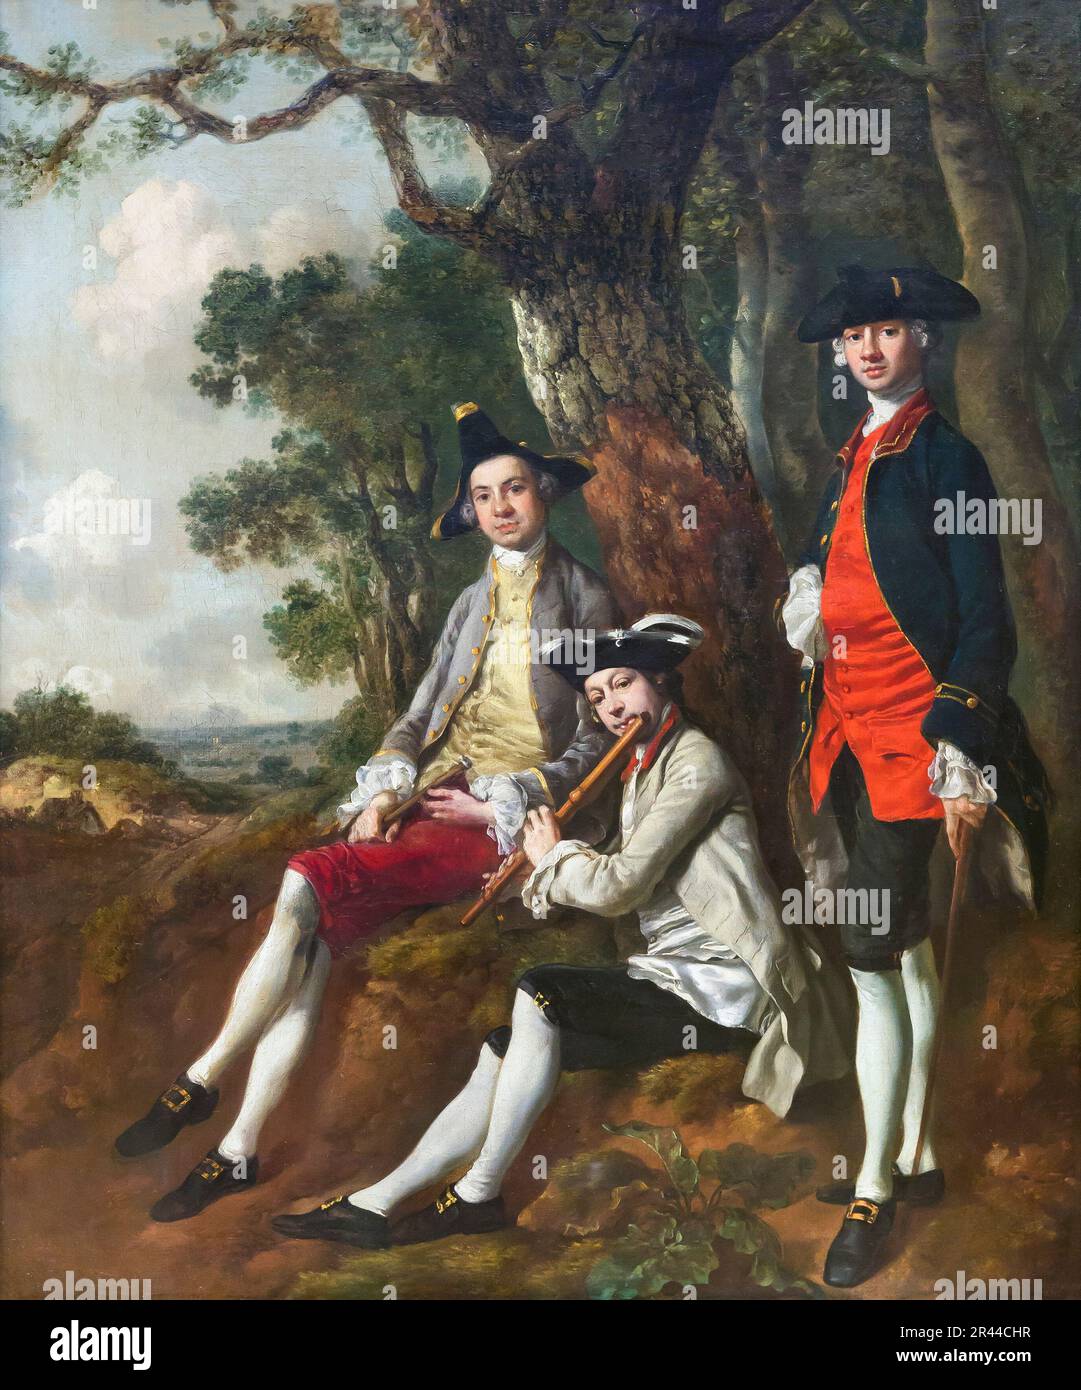 Peter Darnell Muilman, Charles Crokaff et William Keable dans un paysage, Thomas Gainsborough, vers 1750, Banque D'Images